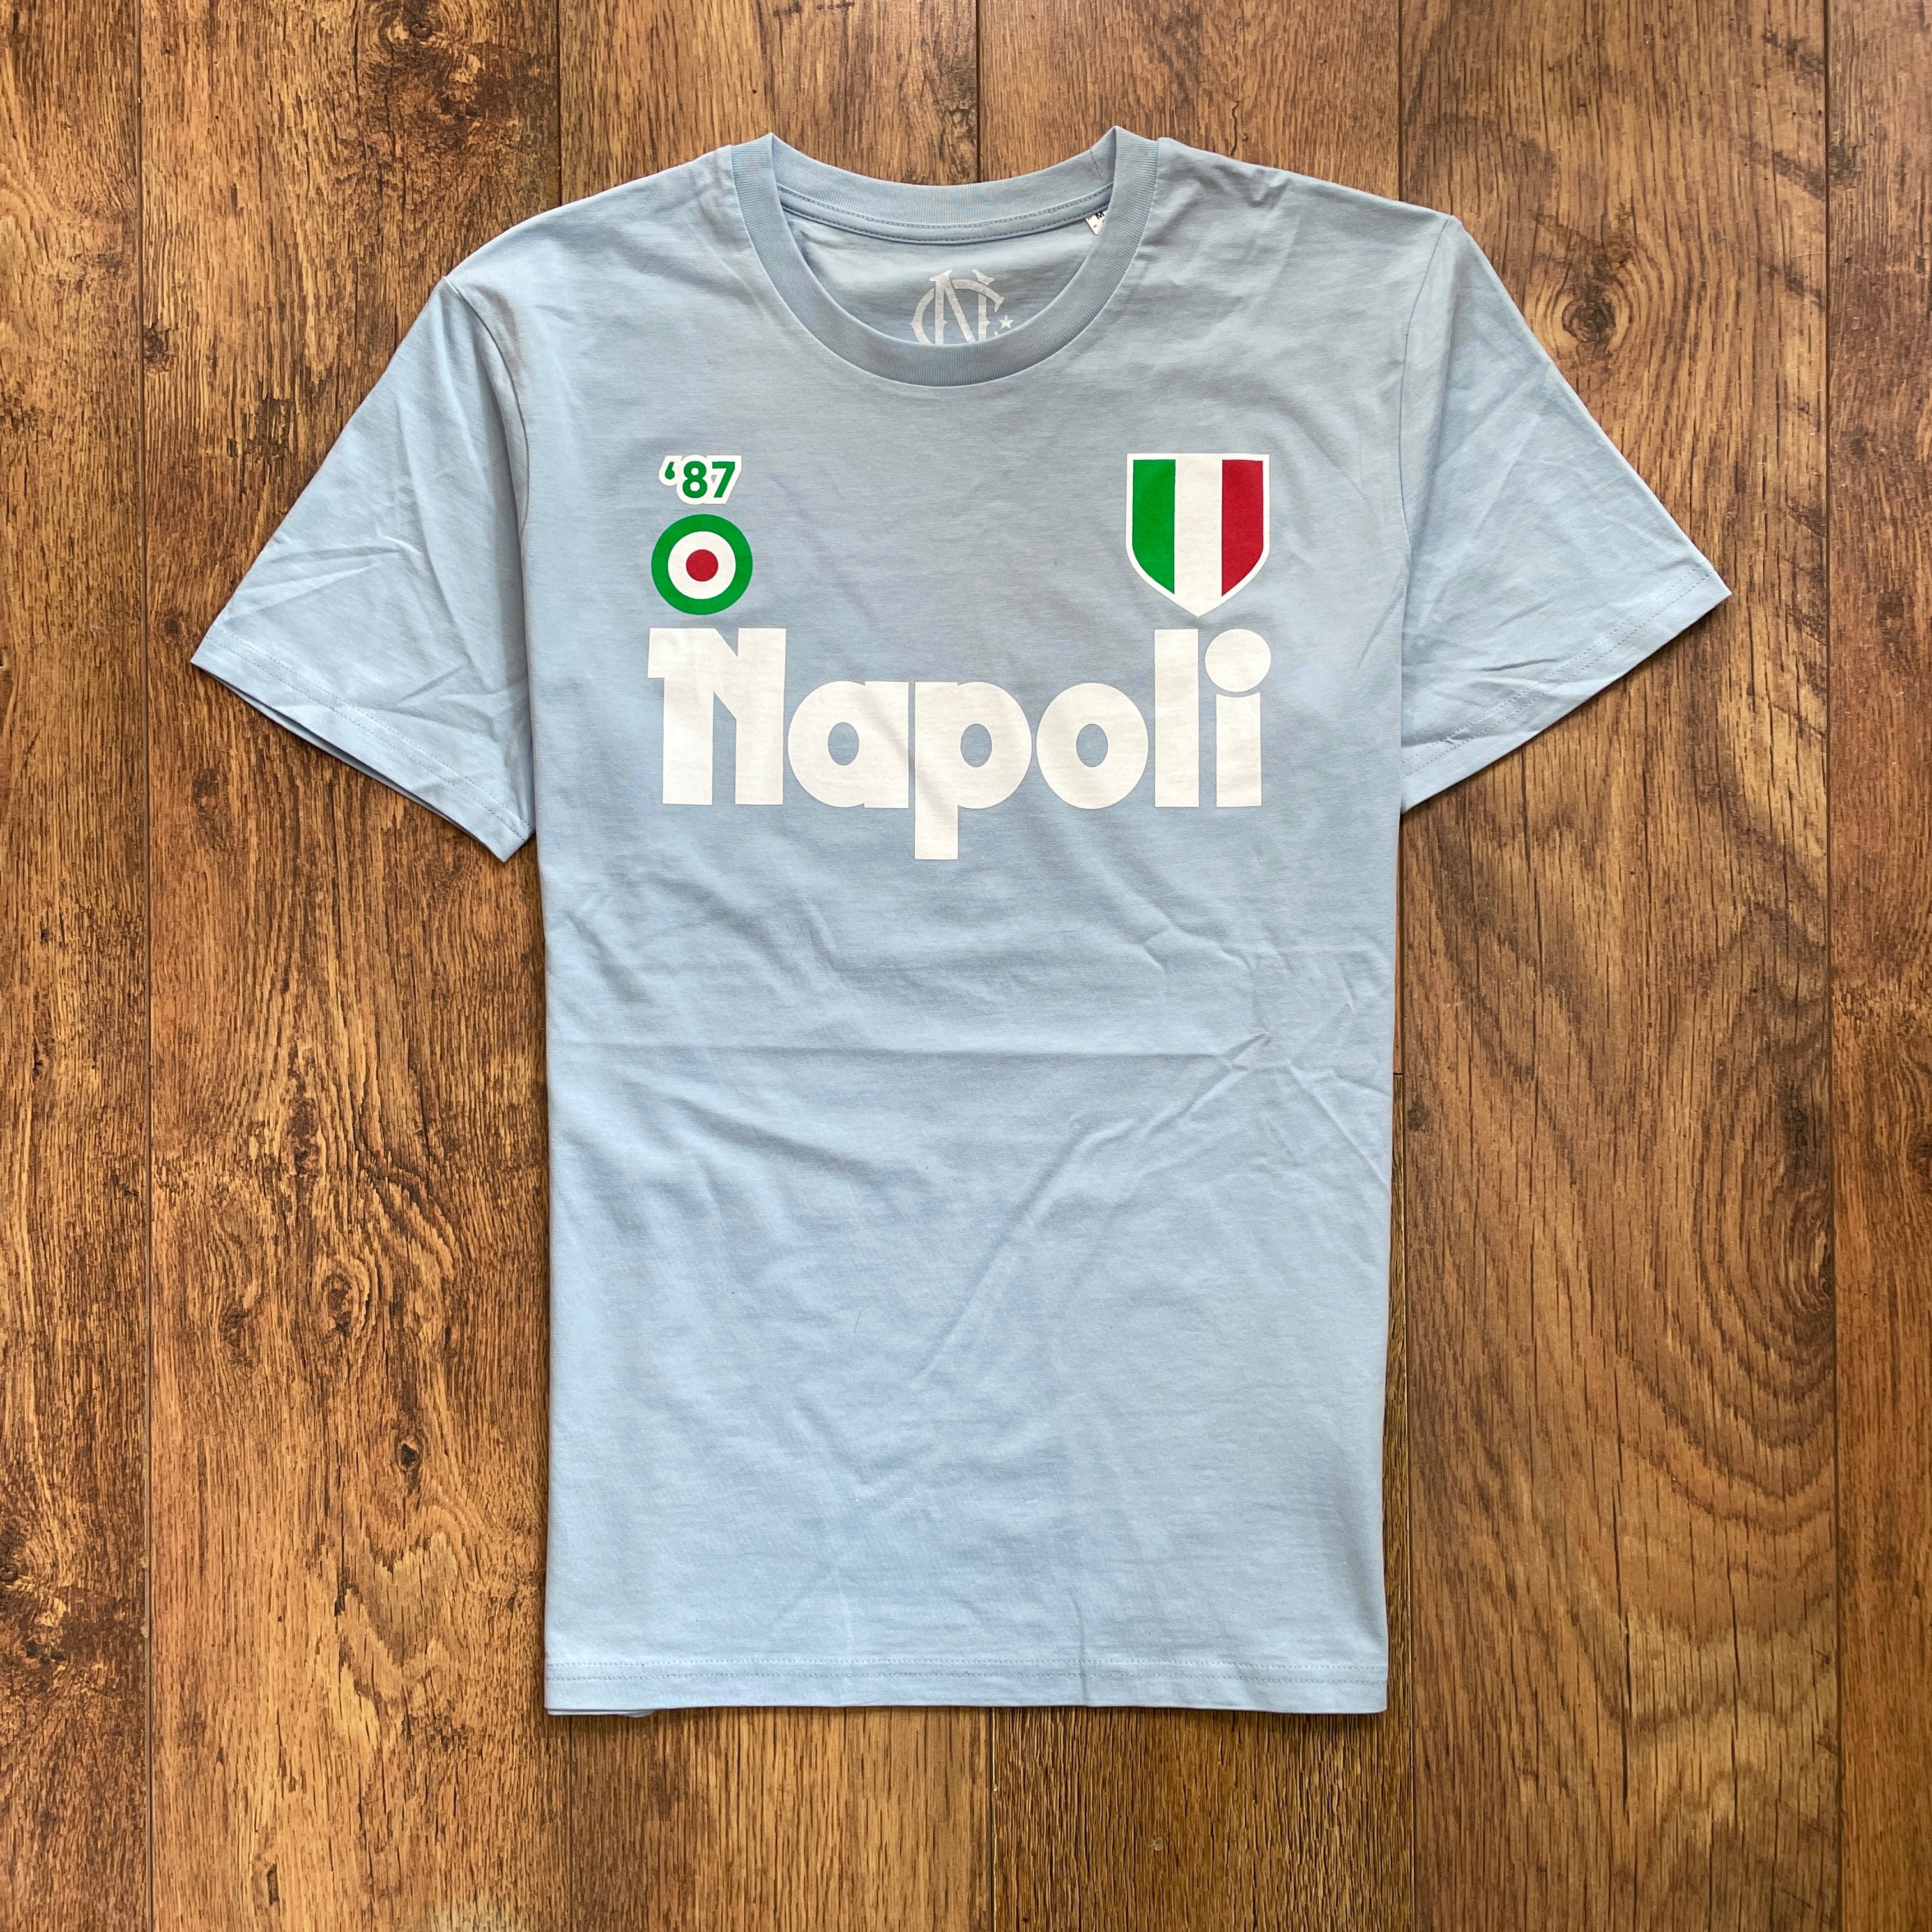 Napoli 1987 shirt t-shirt